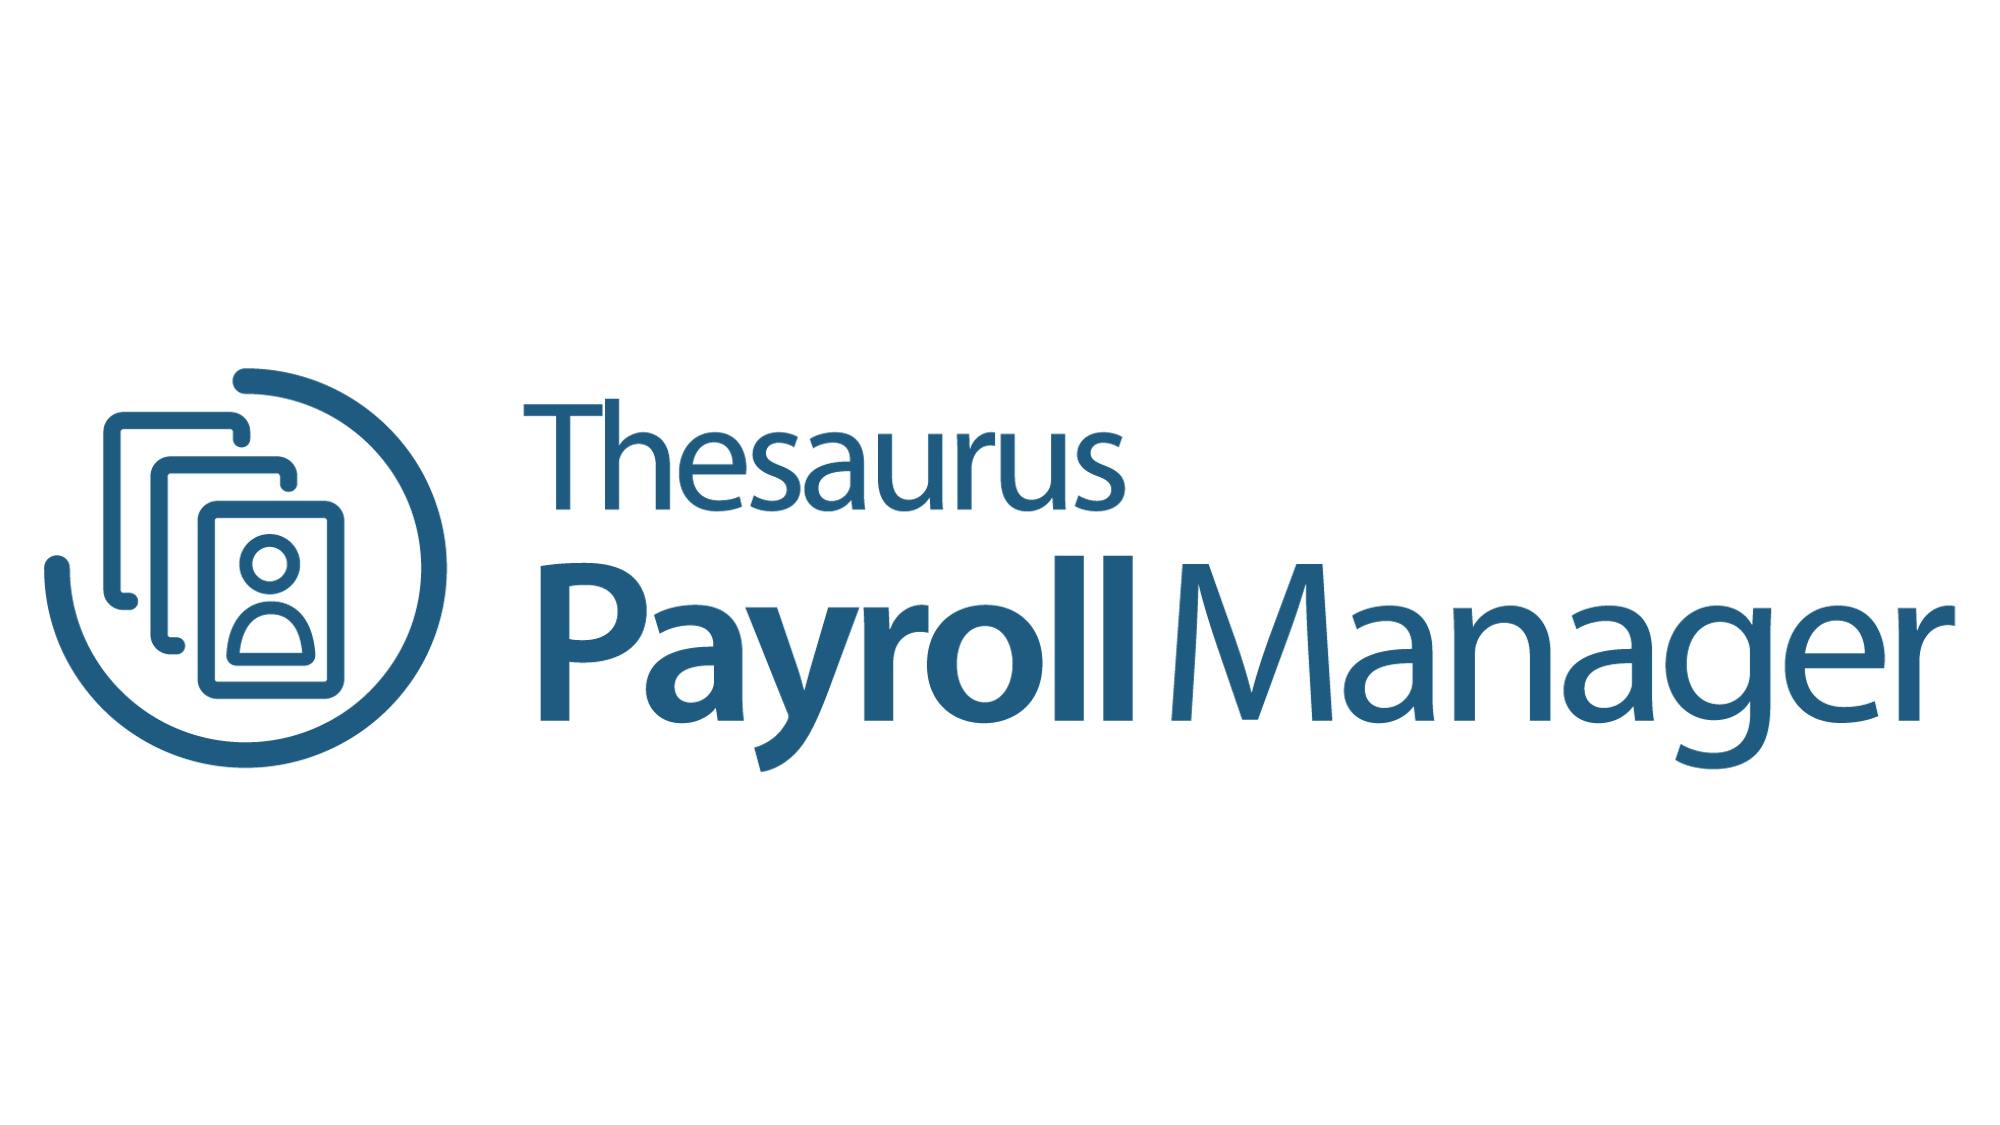 Thesaurus Payroll Manager logo